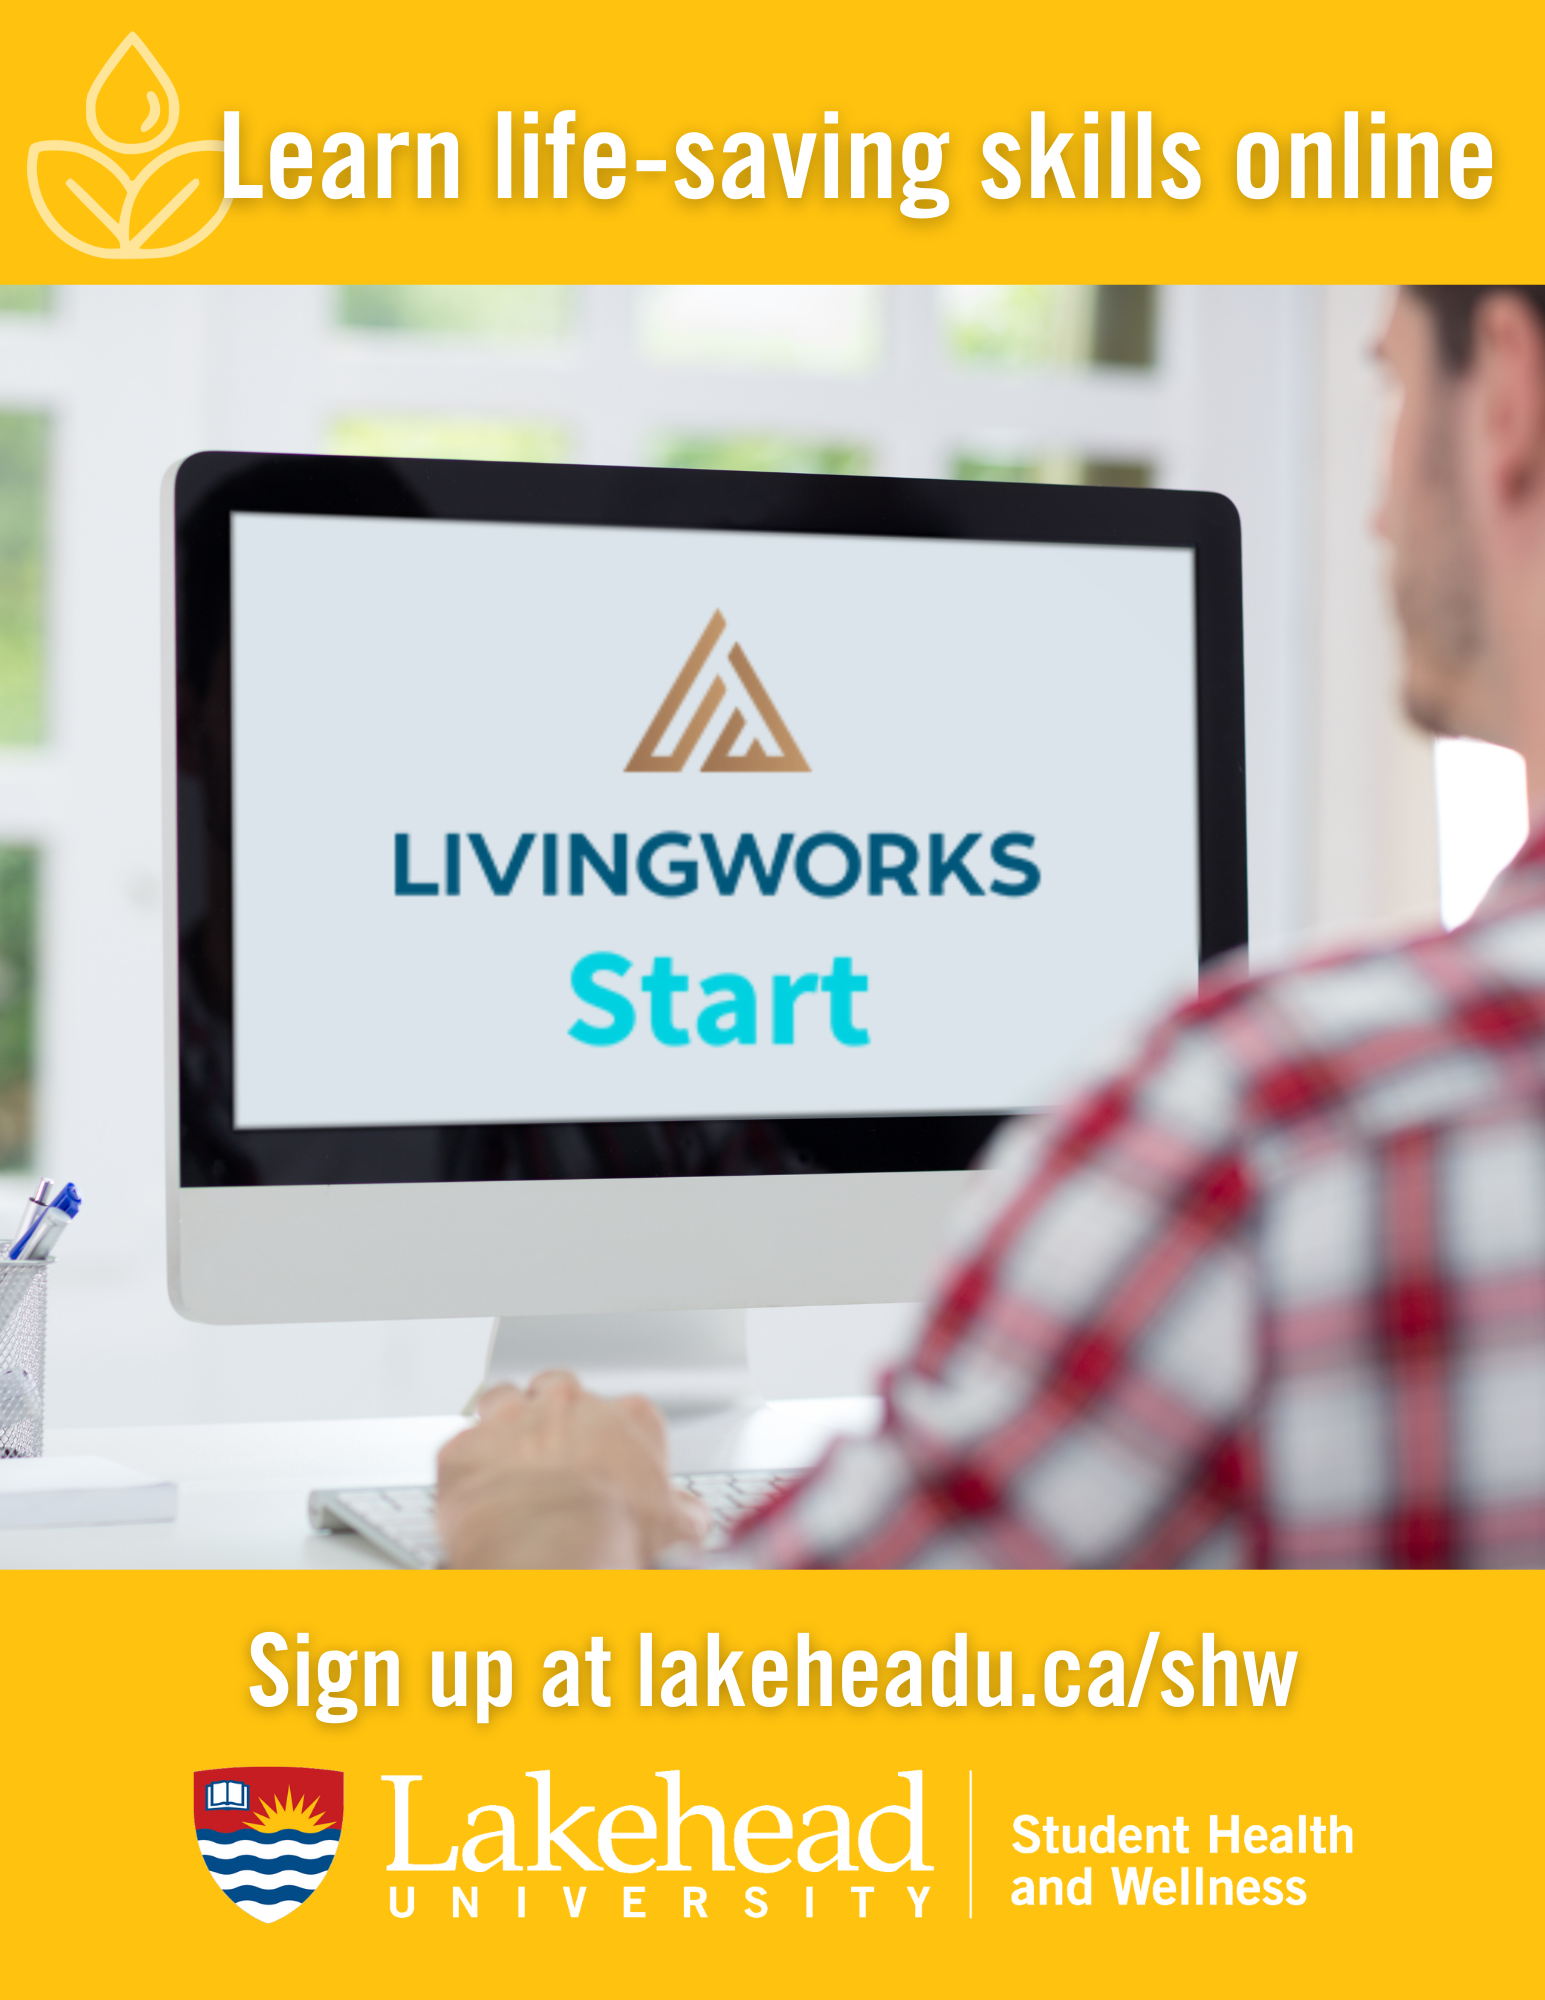 Learn life saving skills online- livingworks start, sign up at lakeheadu.ca/shw